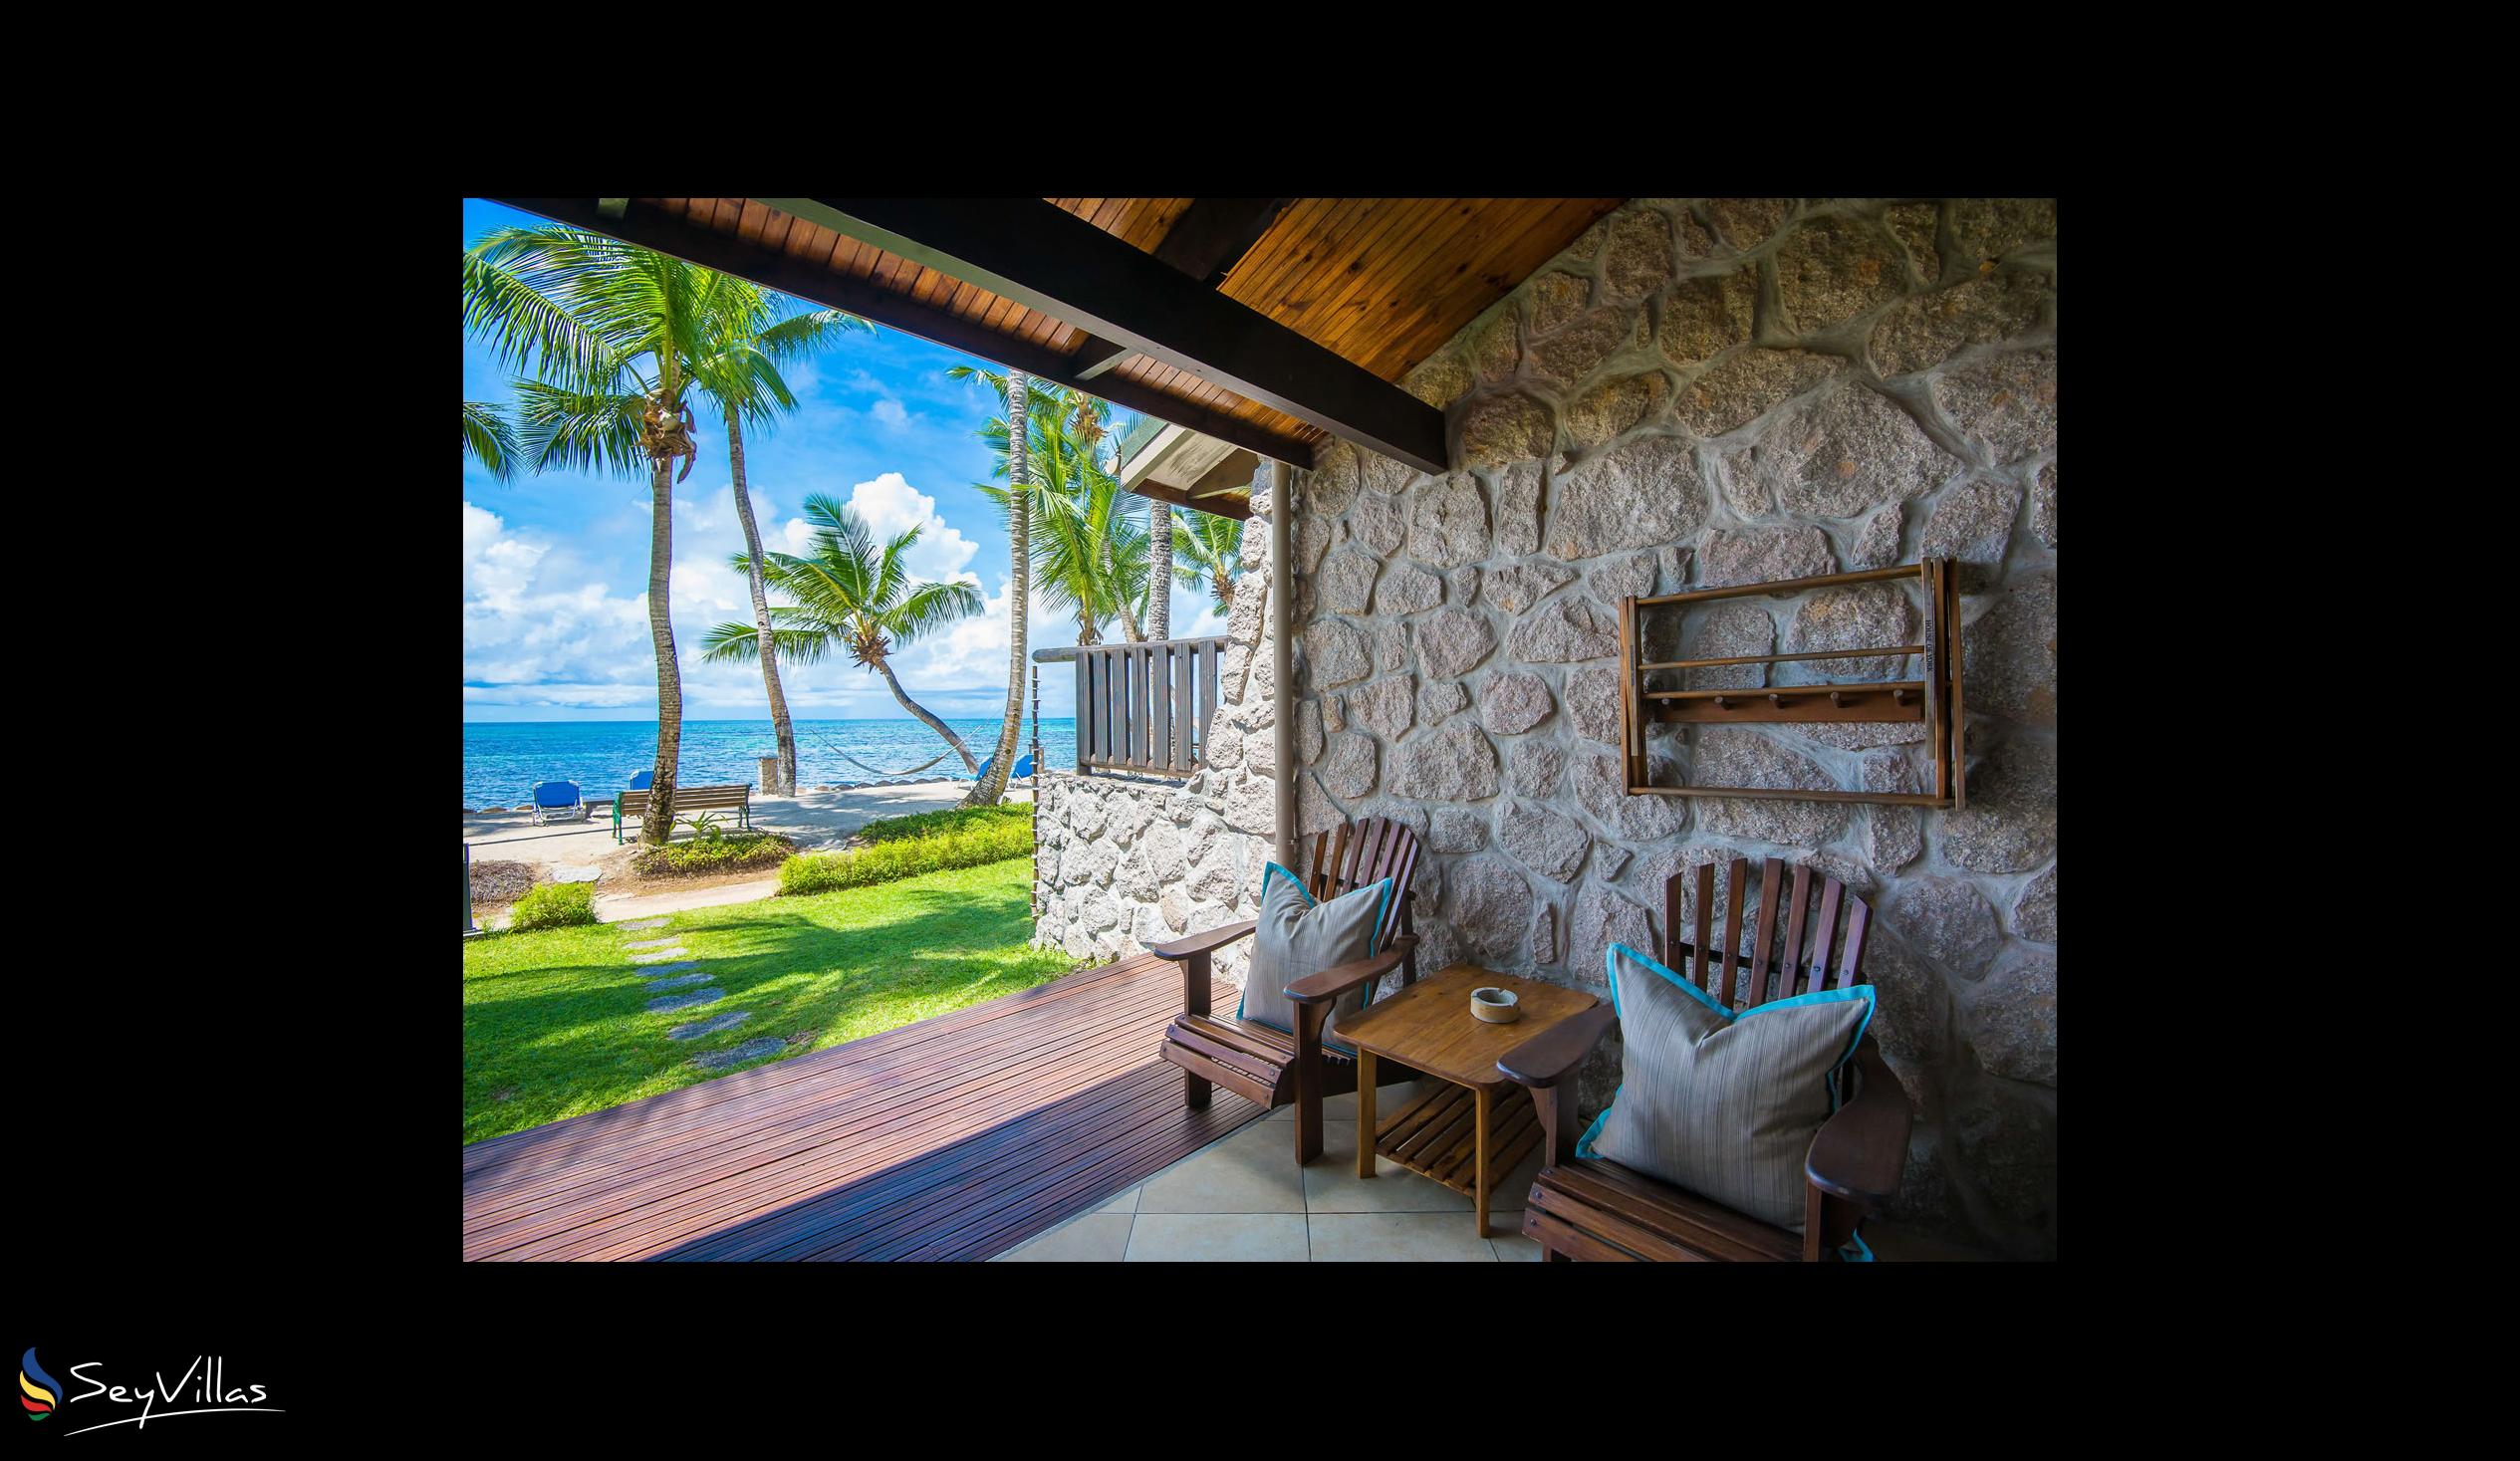 Foto 68: Coco de Mer & Black Parrot Suites - Superior - Praslin (Seychellen)